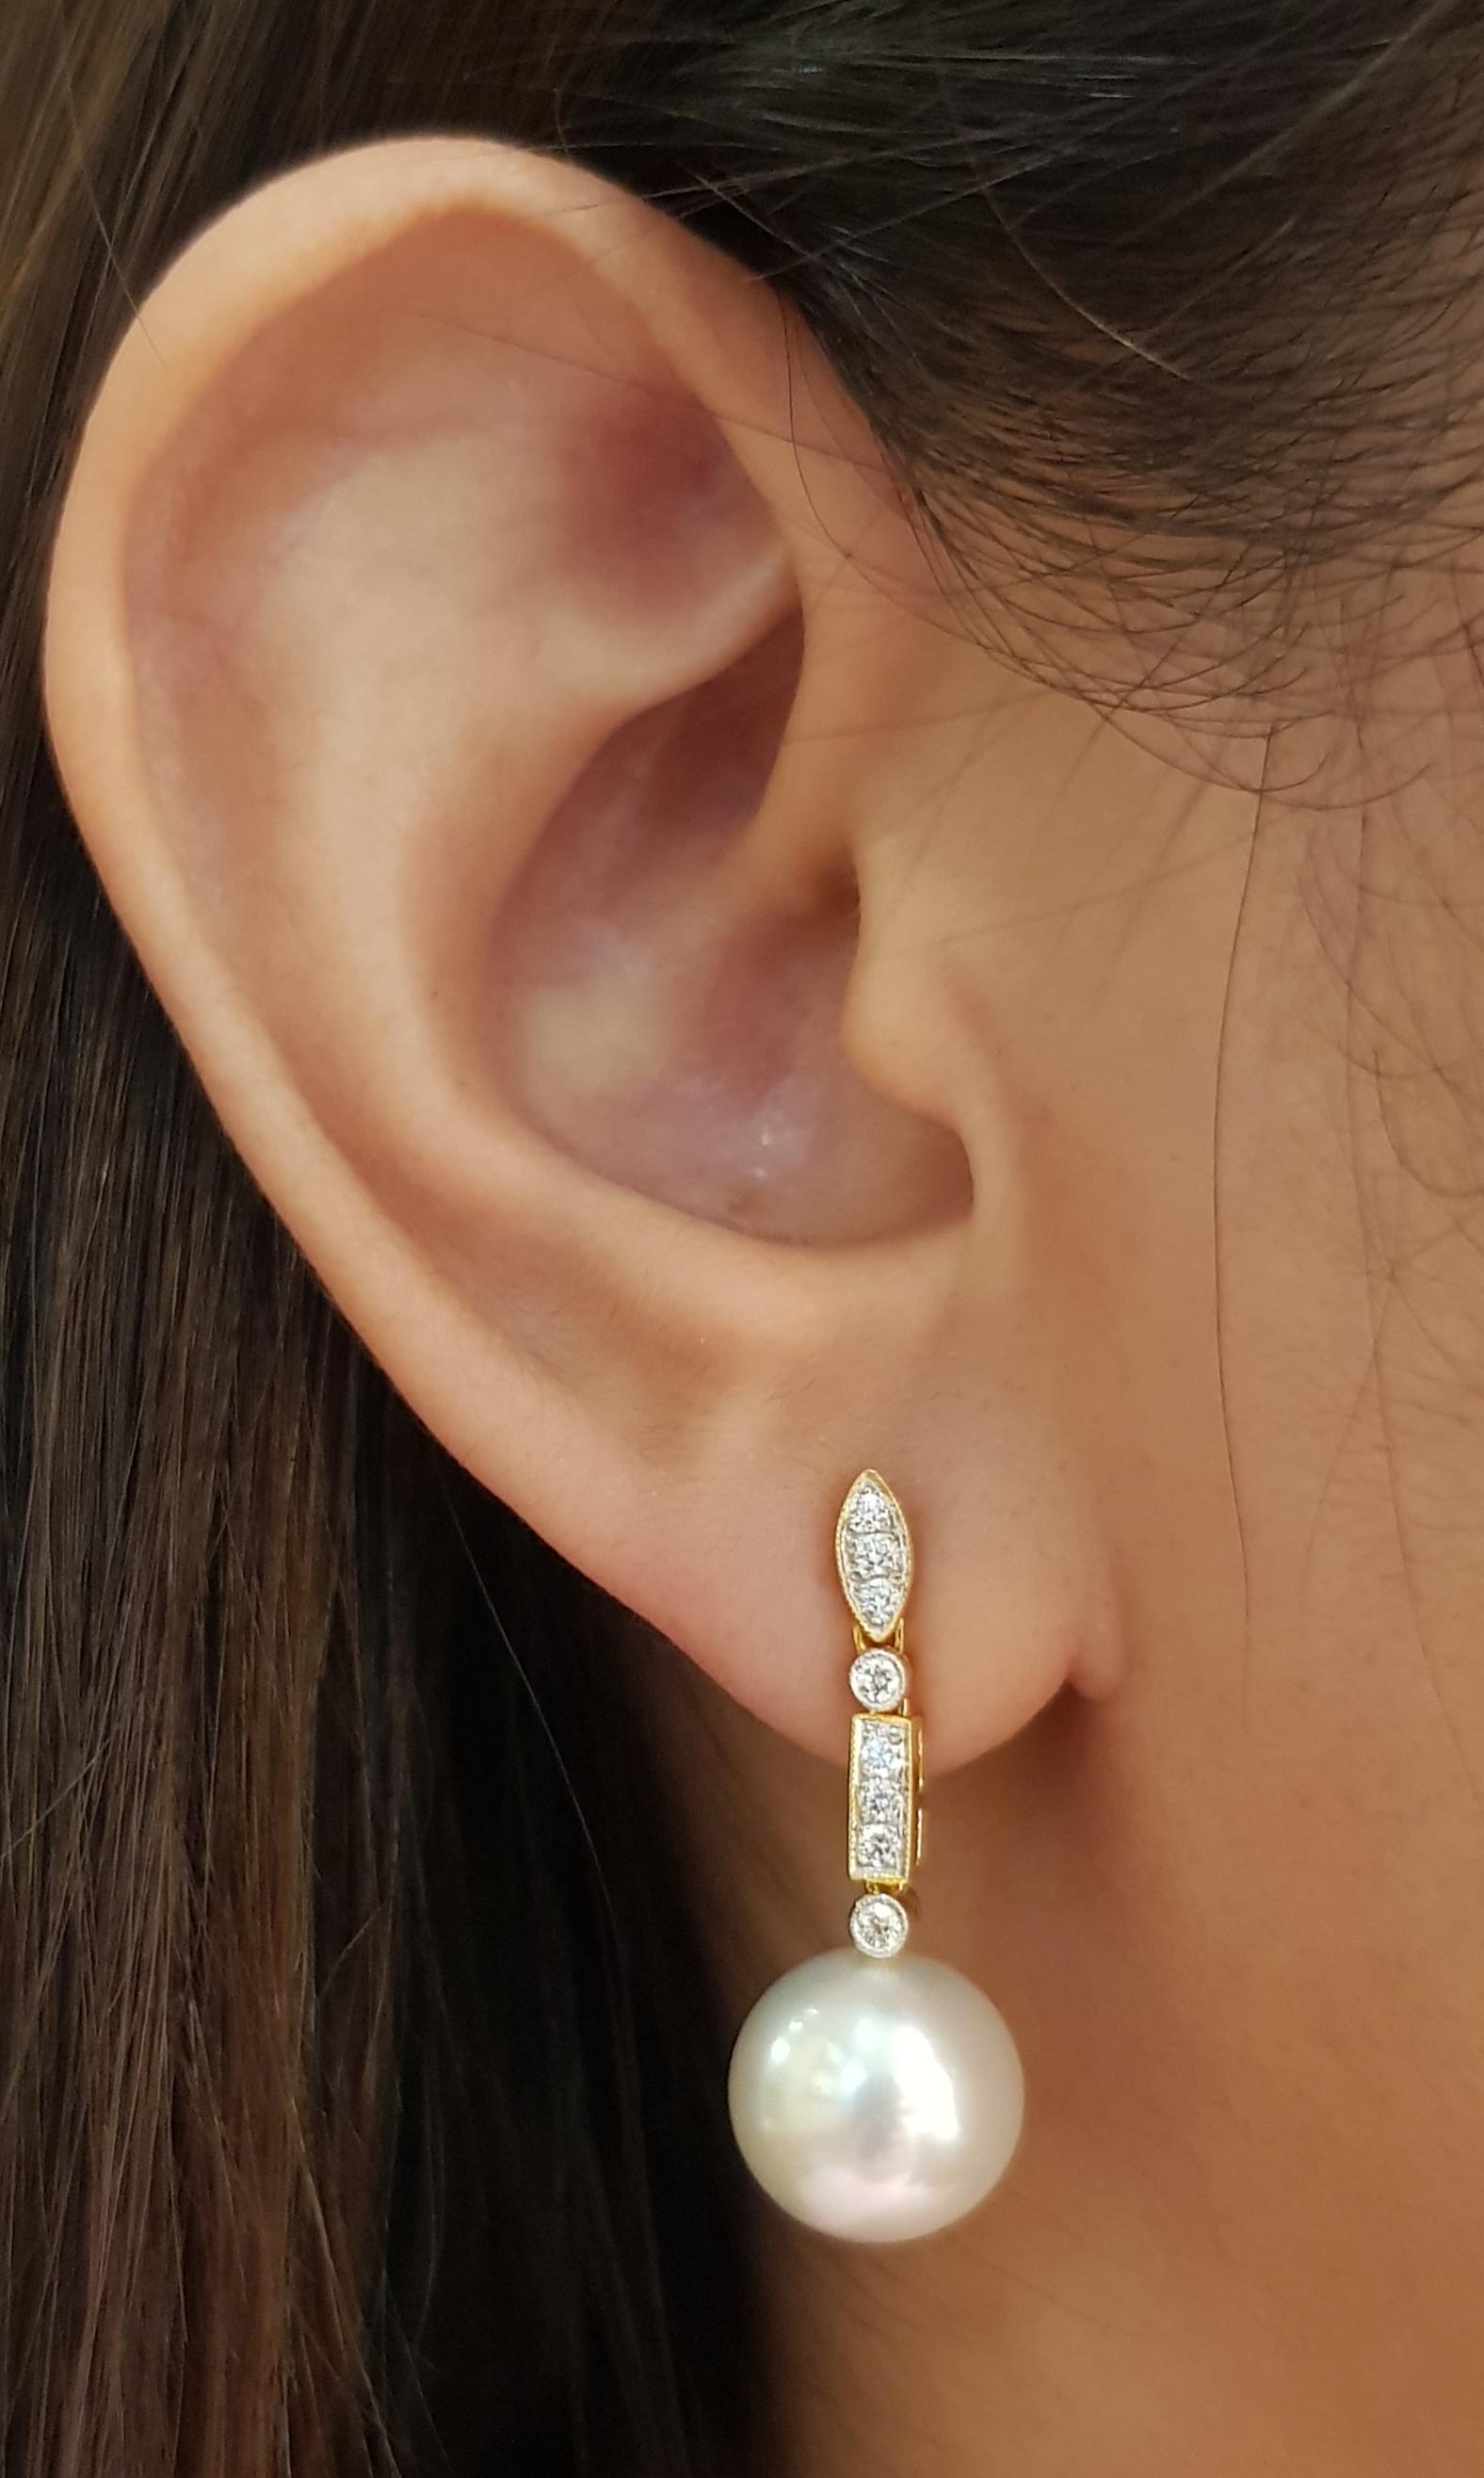 South Sea Pearl with Diamond 0.20 carat Earrings set in 18 Karat Gold Settings

Width:   0.90 cm 
Length:  1.60 cm
Total Weight: 8.0 grams

South Sea Pearl: 10.6 mm

